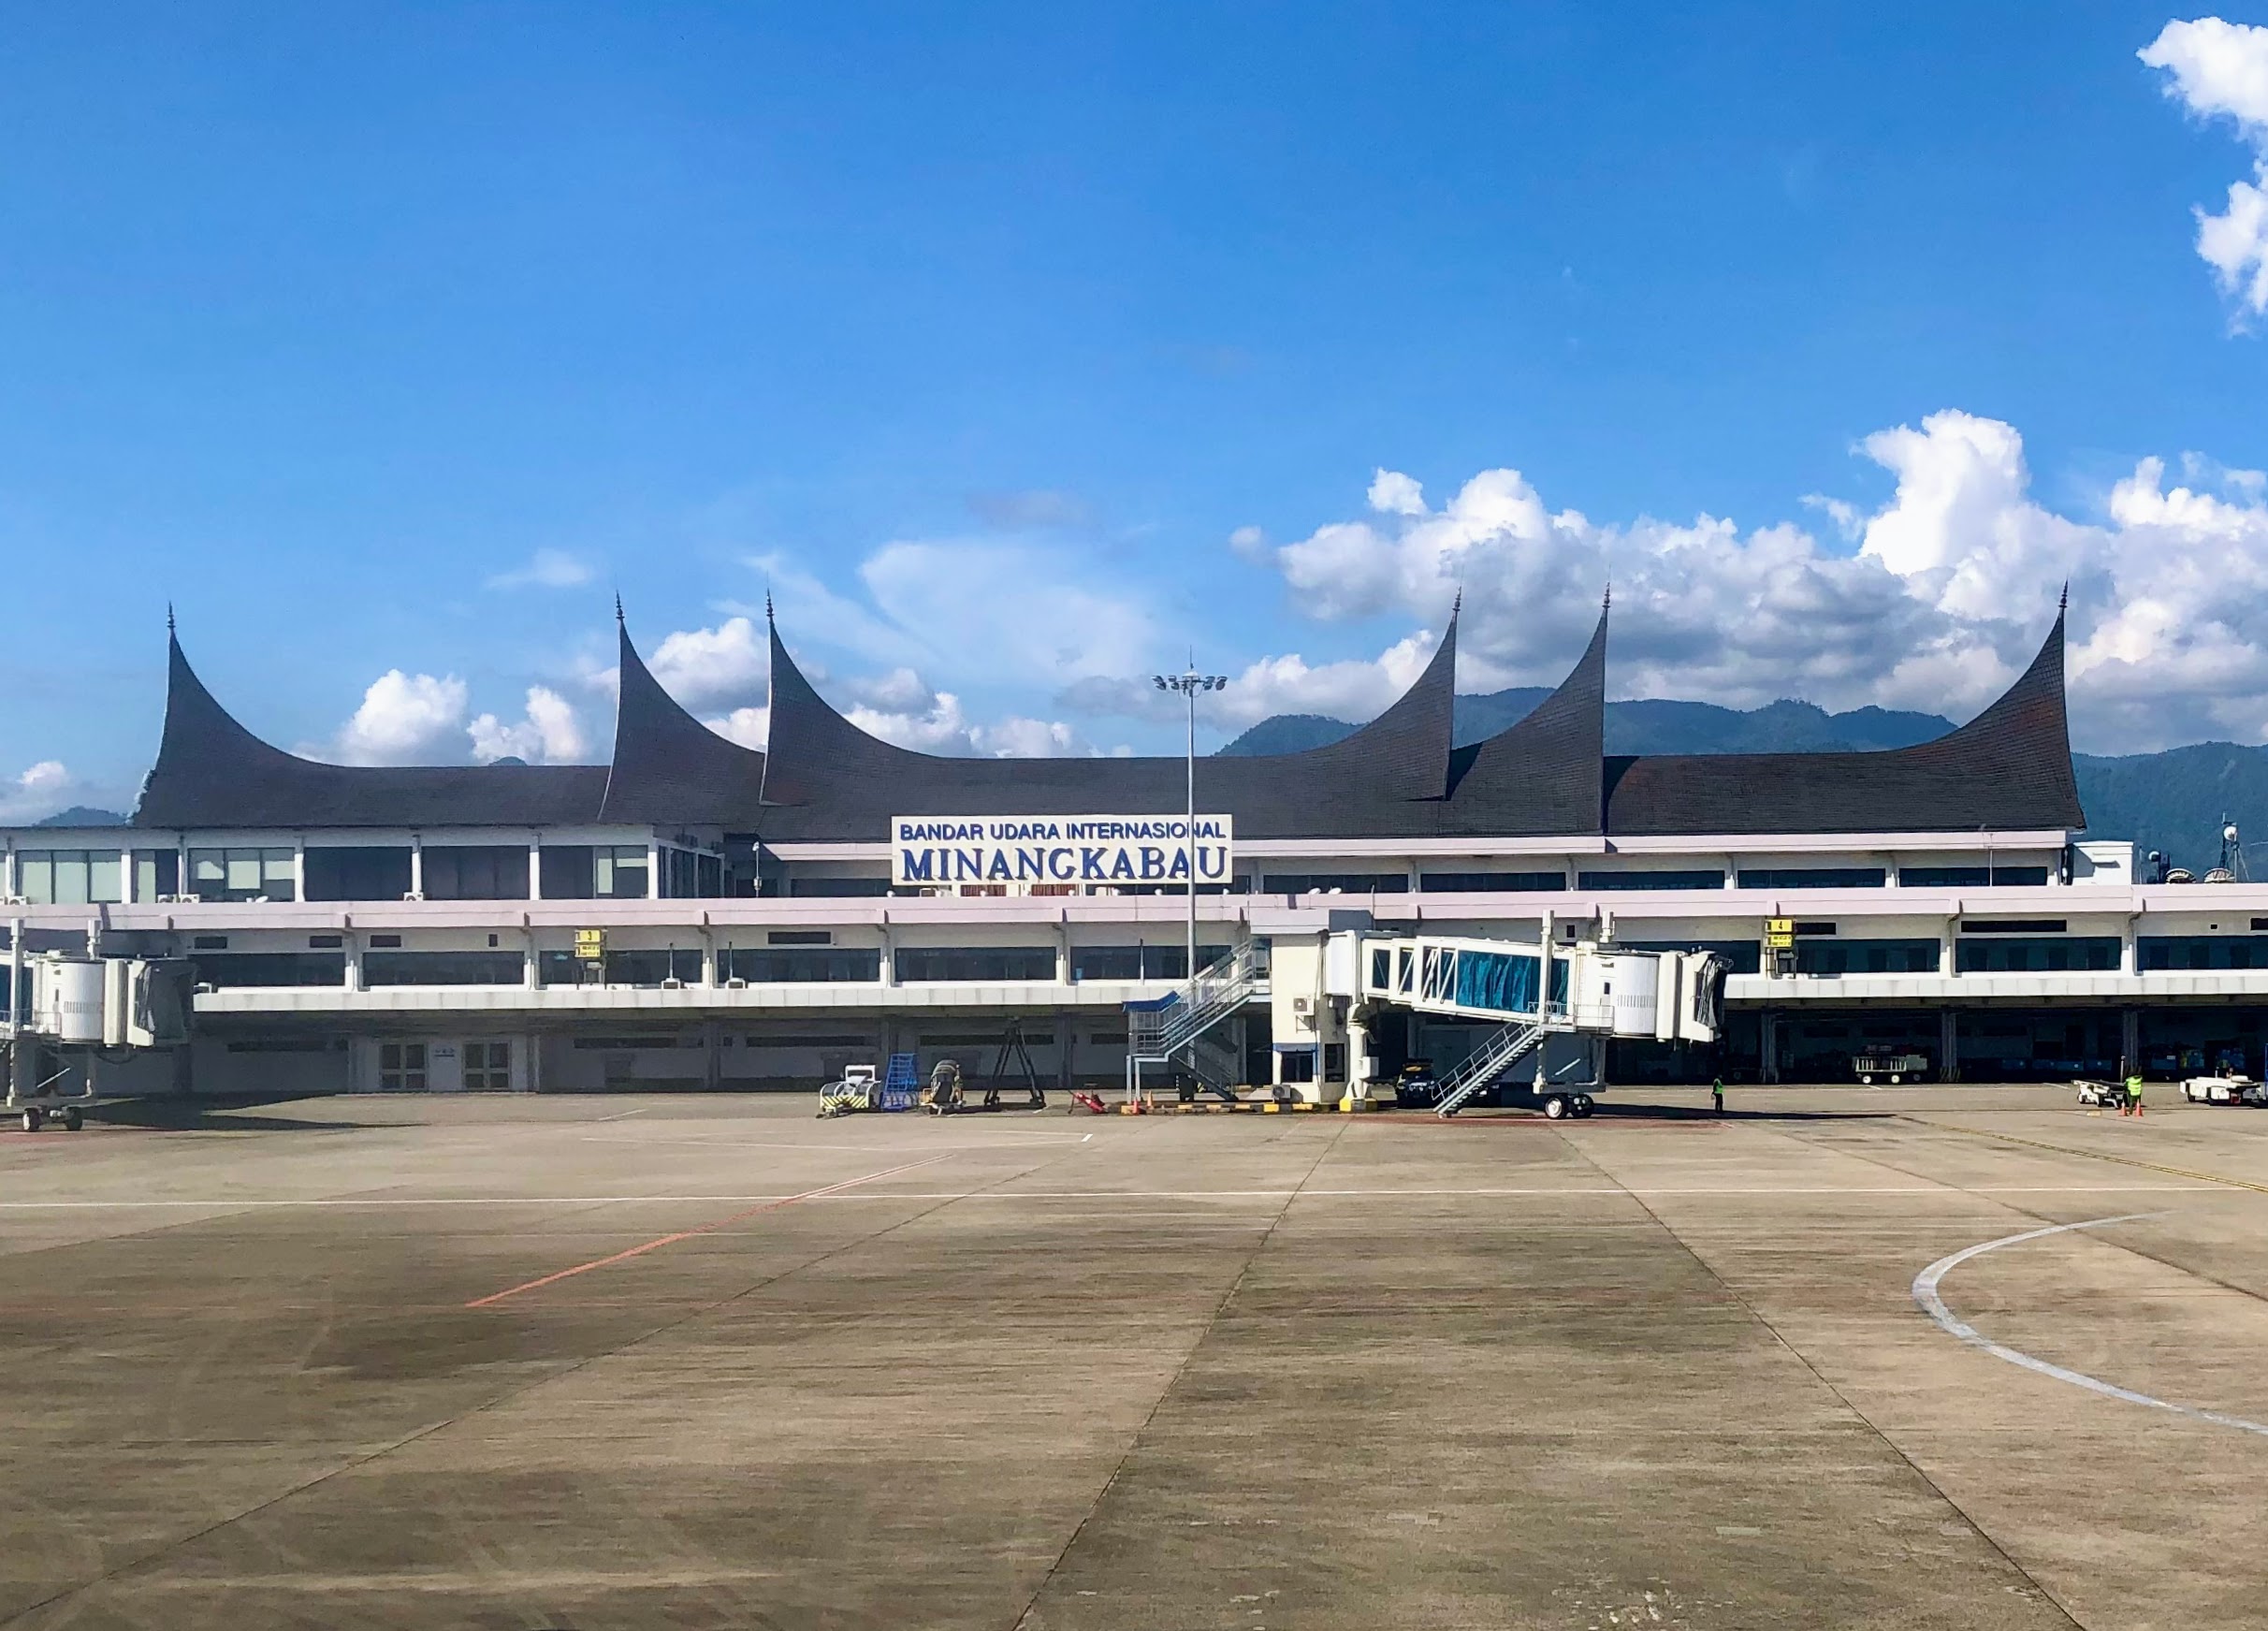 Minangkabau airport, with traditional Minang architecture resembling the water buffalo (kabau).